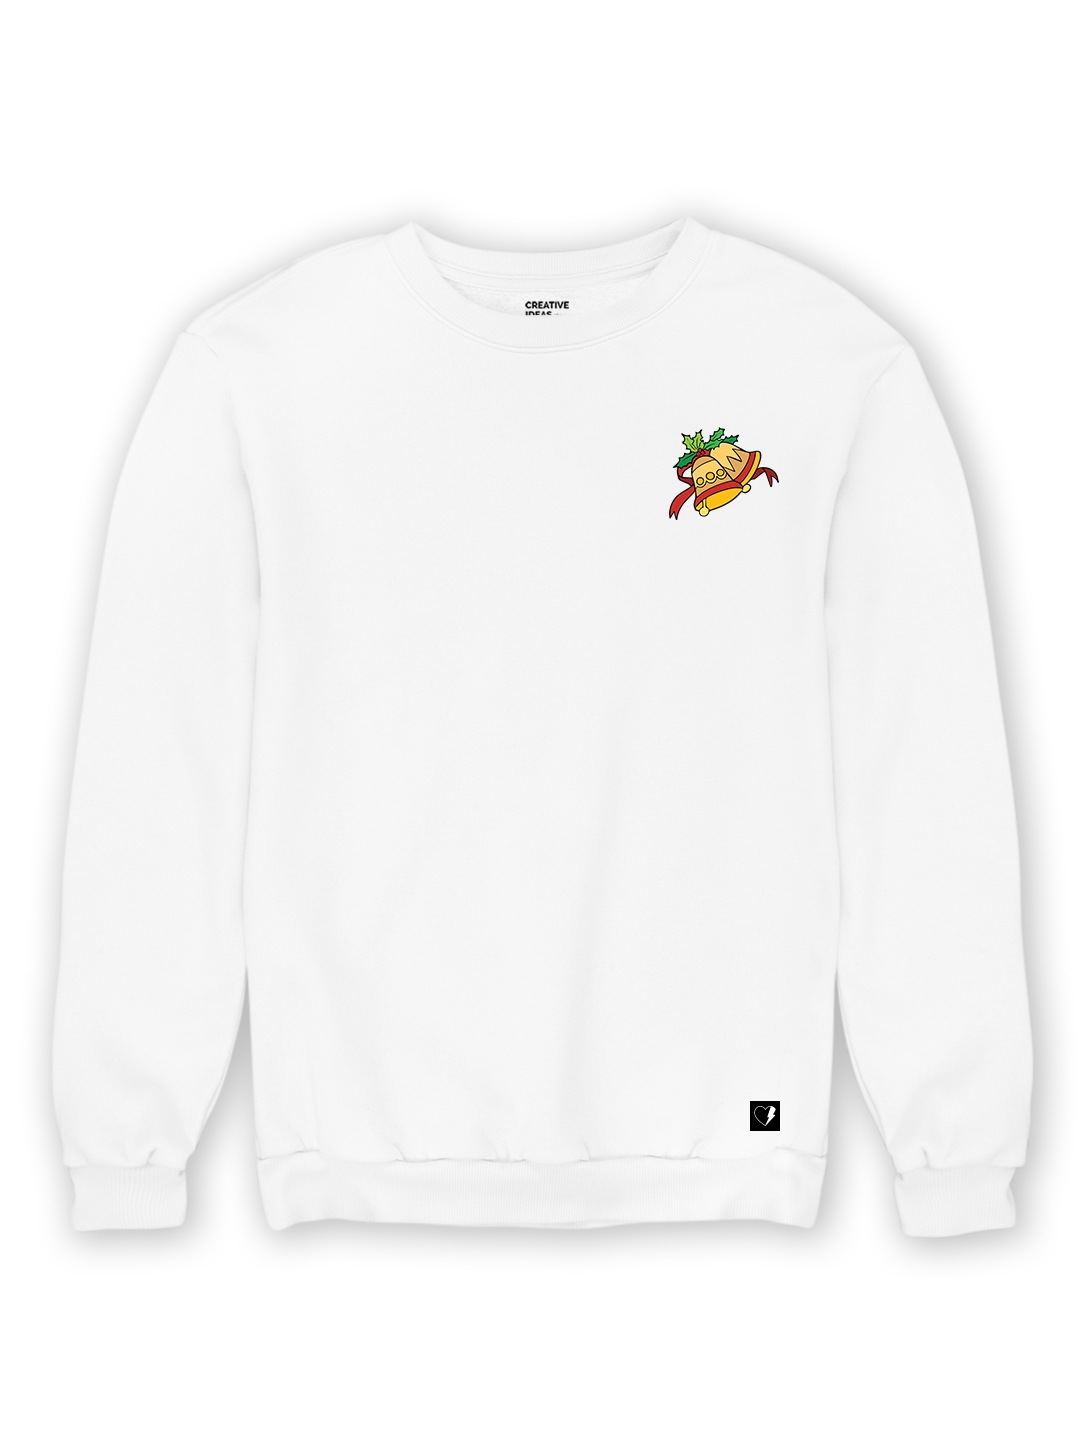 creativeideas.store | Christmas Bell Pocket White Unisex Cotton Sweatshirt 0